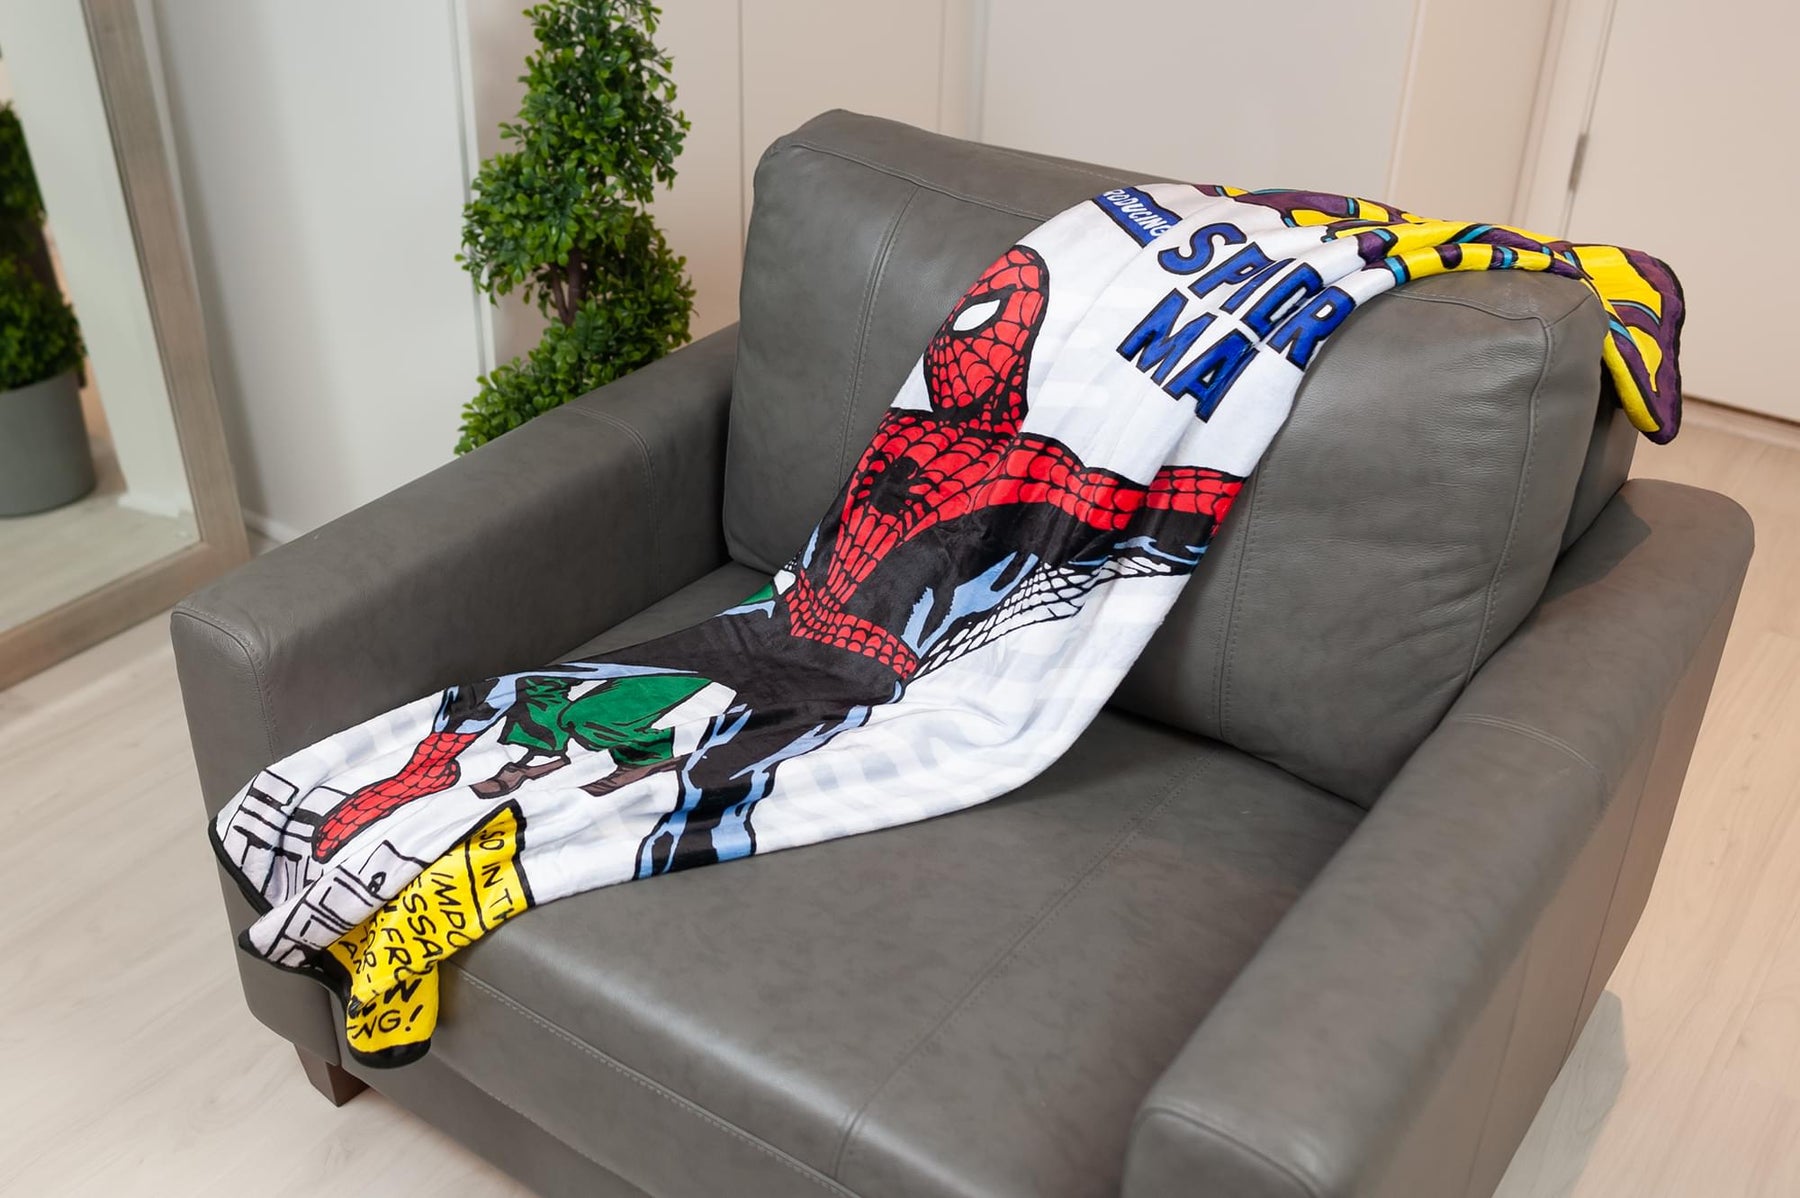 Marvel Spider-Man Amazing Fantasy No. 15 Fleece Throw Blanket | 60 x 45 Inches